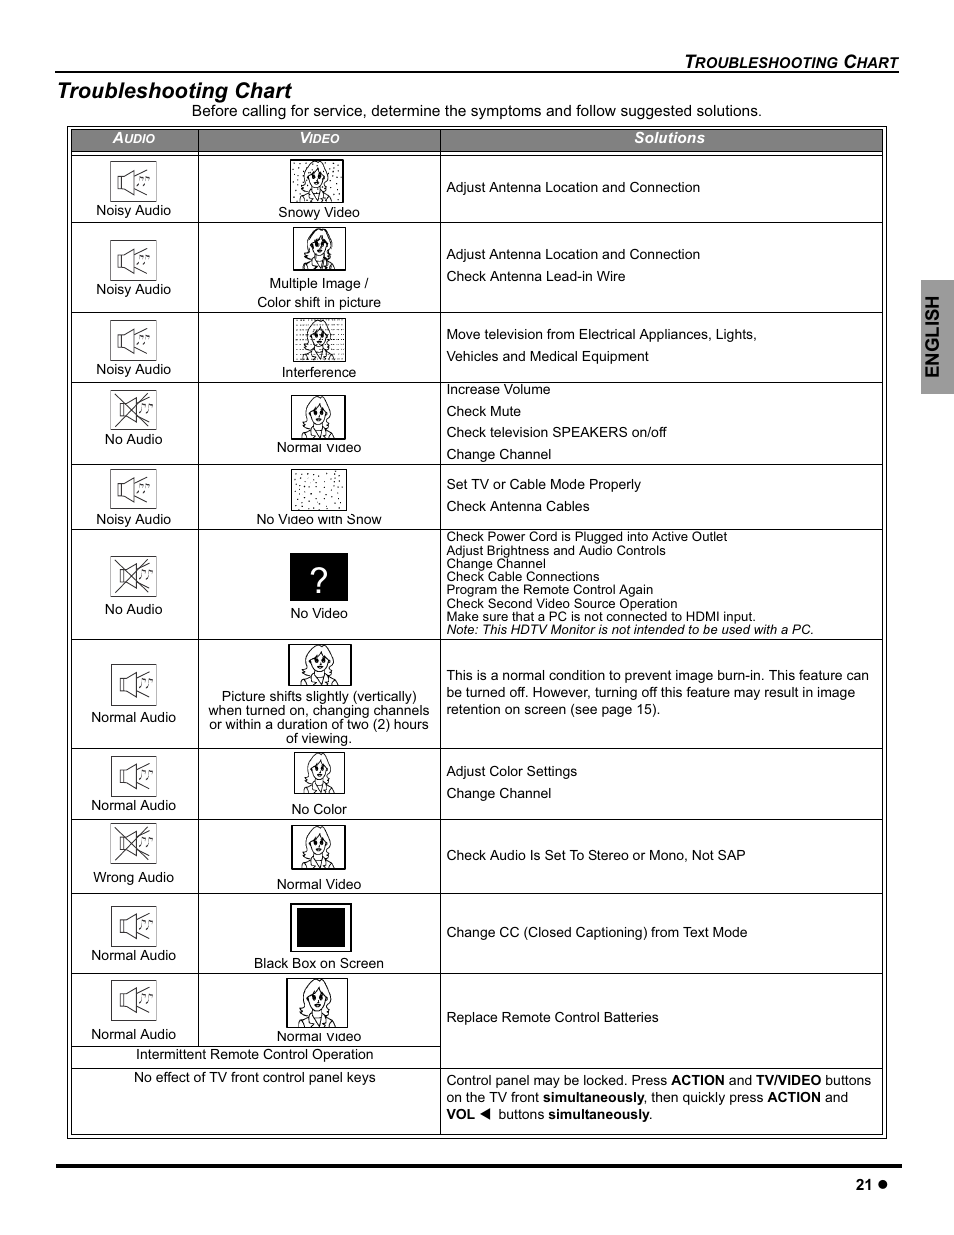 Troubleshooting chart | Panasonic CT-32HC15 Manuel d'utilisation | Page 23 / 56